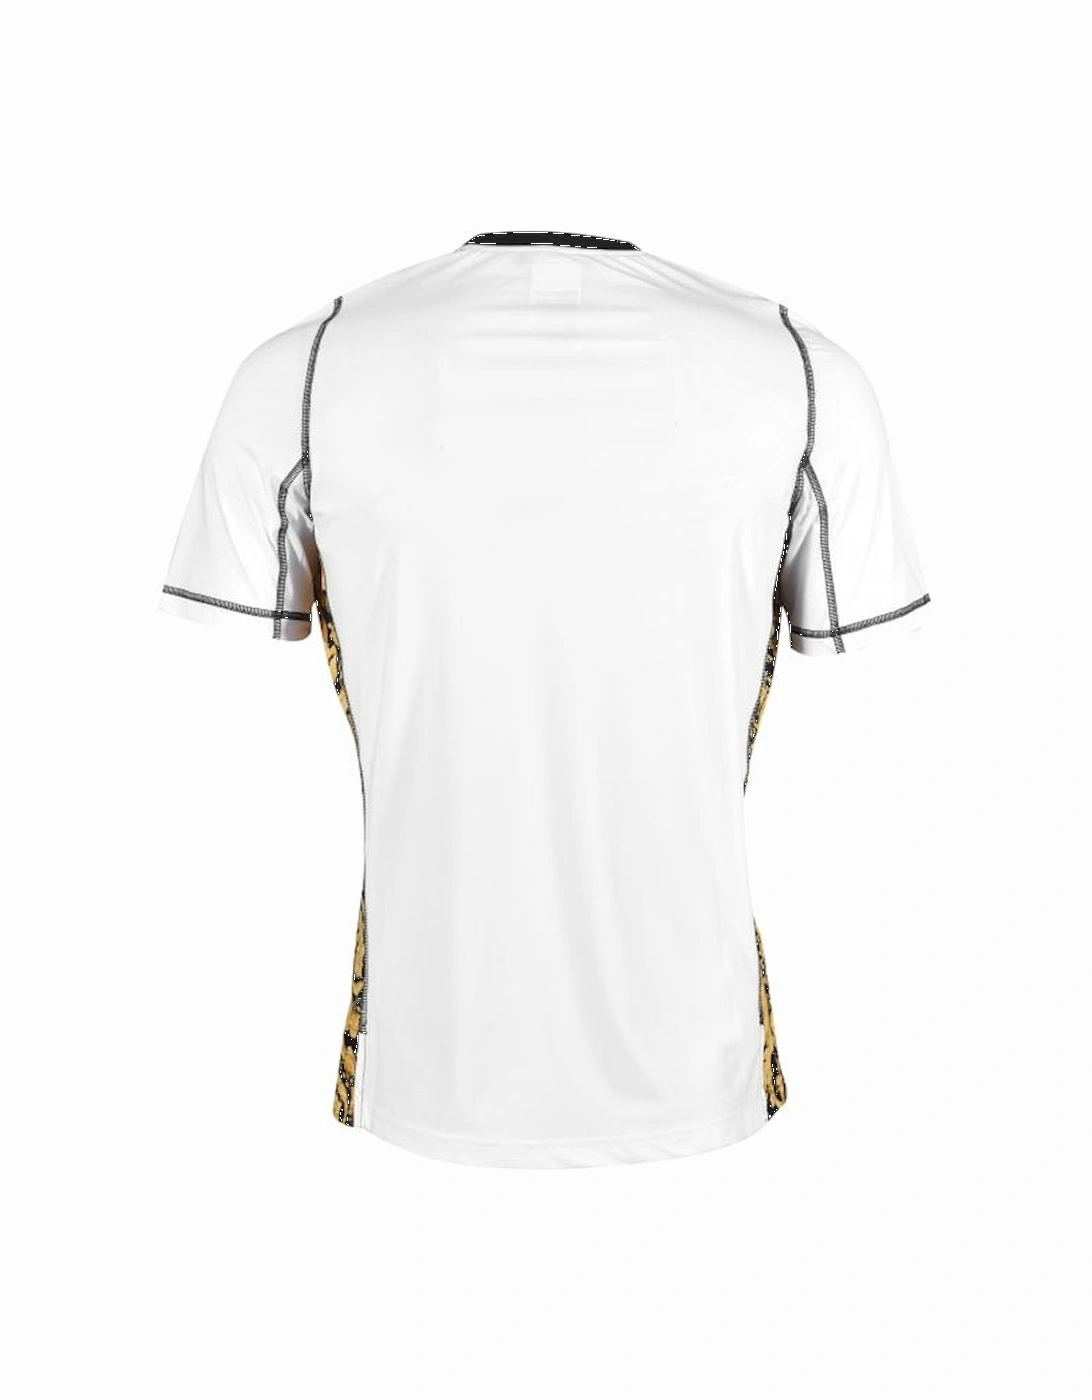 Golden Baroque Technical Gym T-Shirt, White